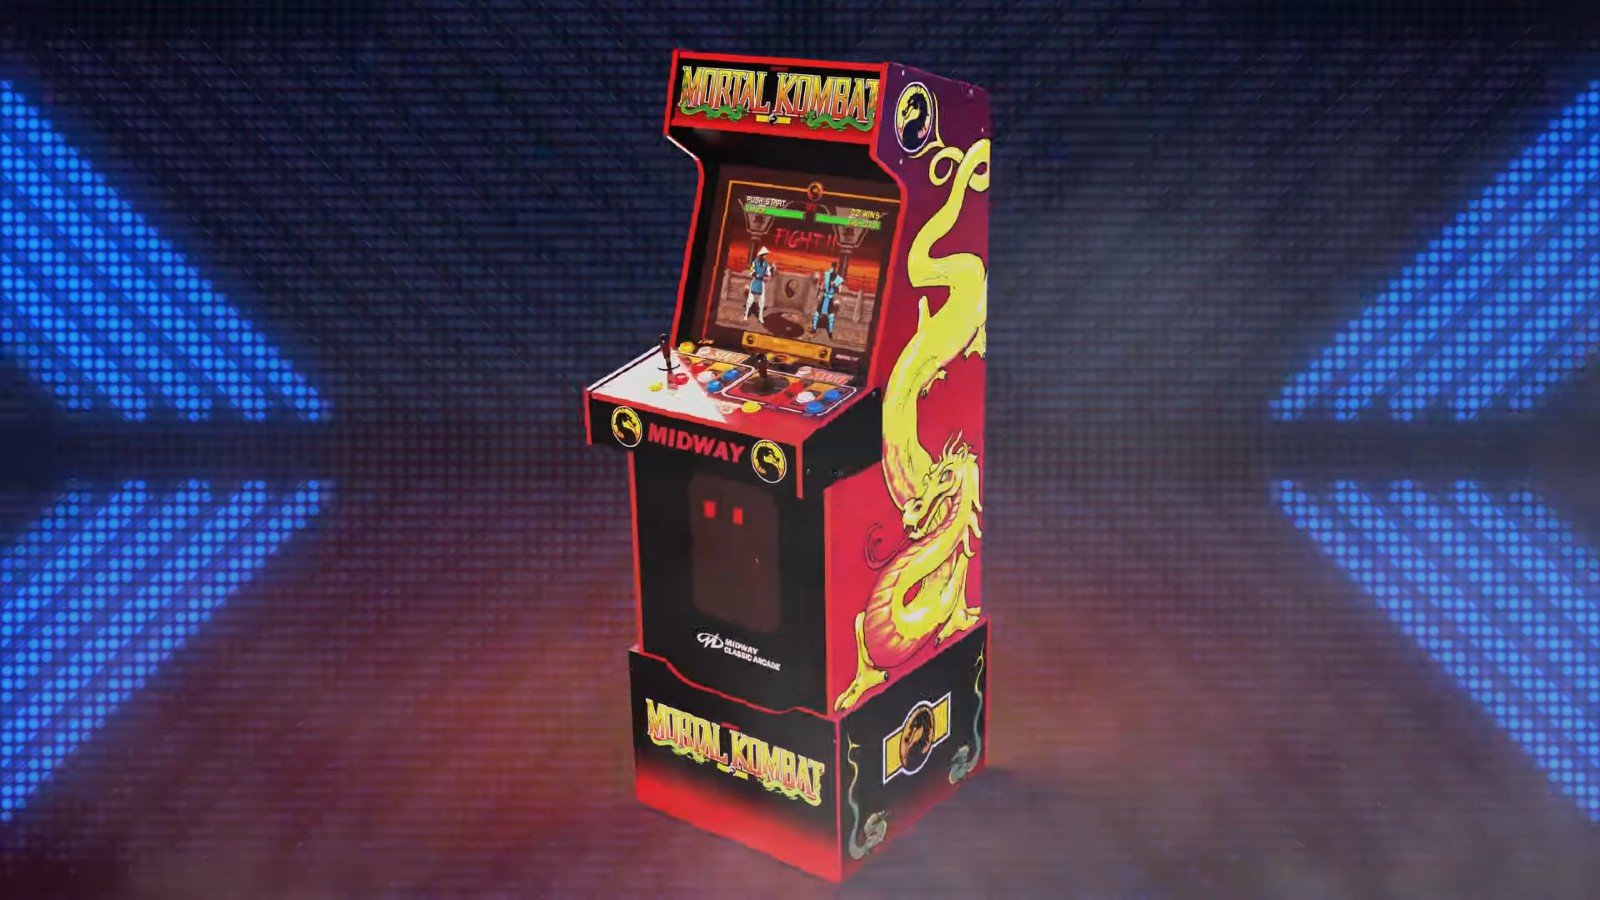 arcade1up Mortal Kombat